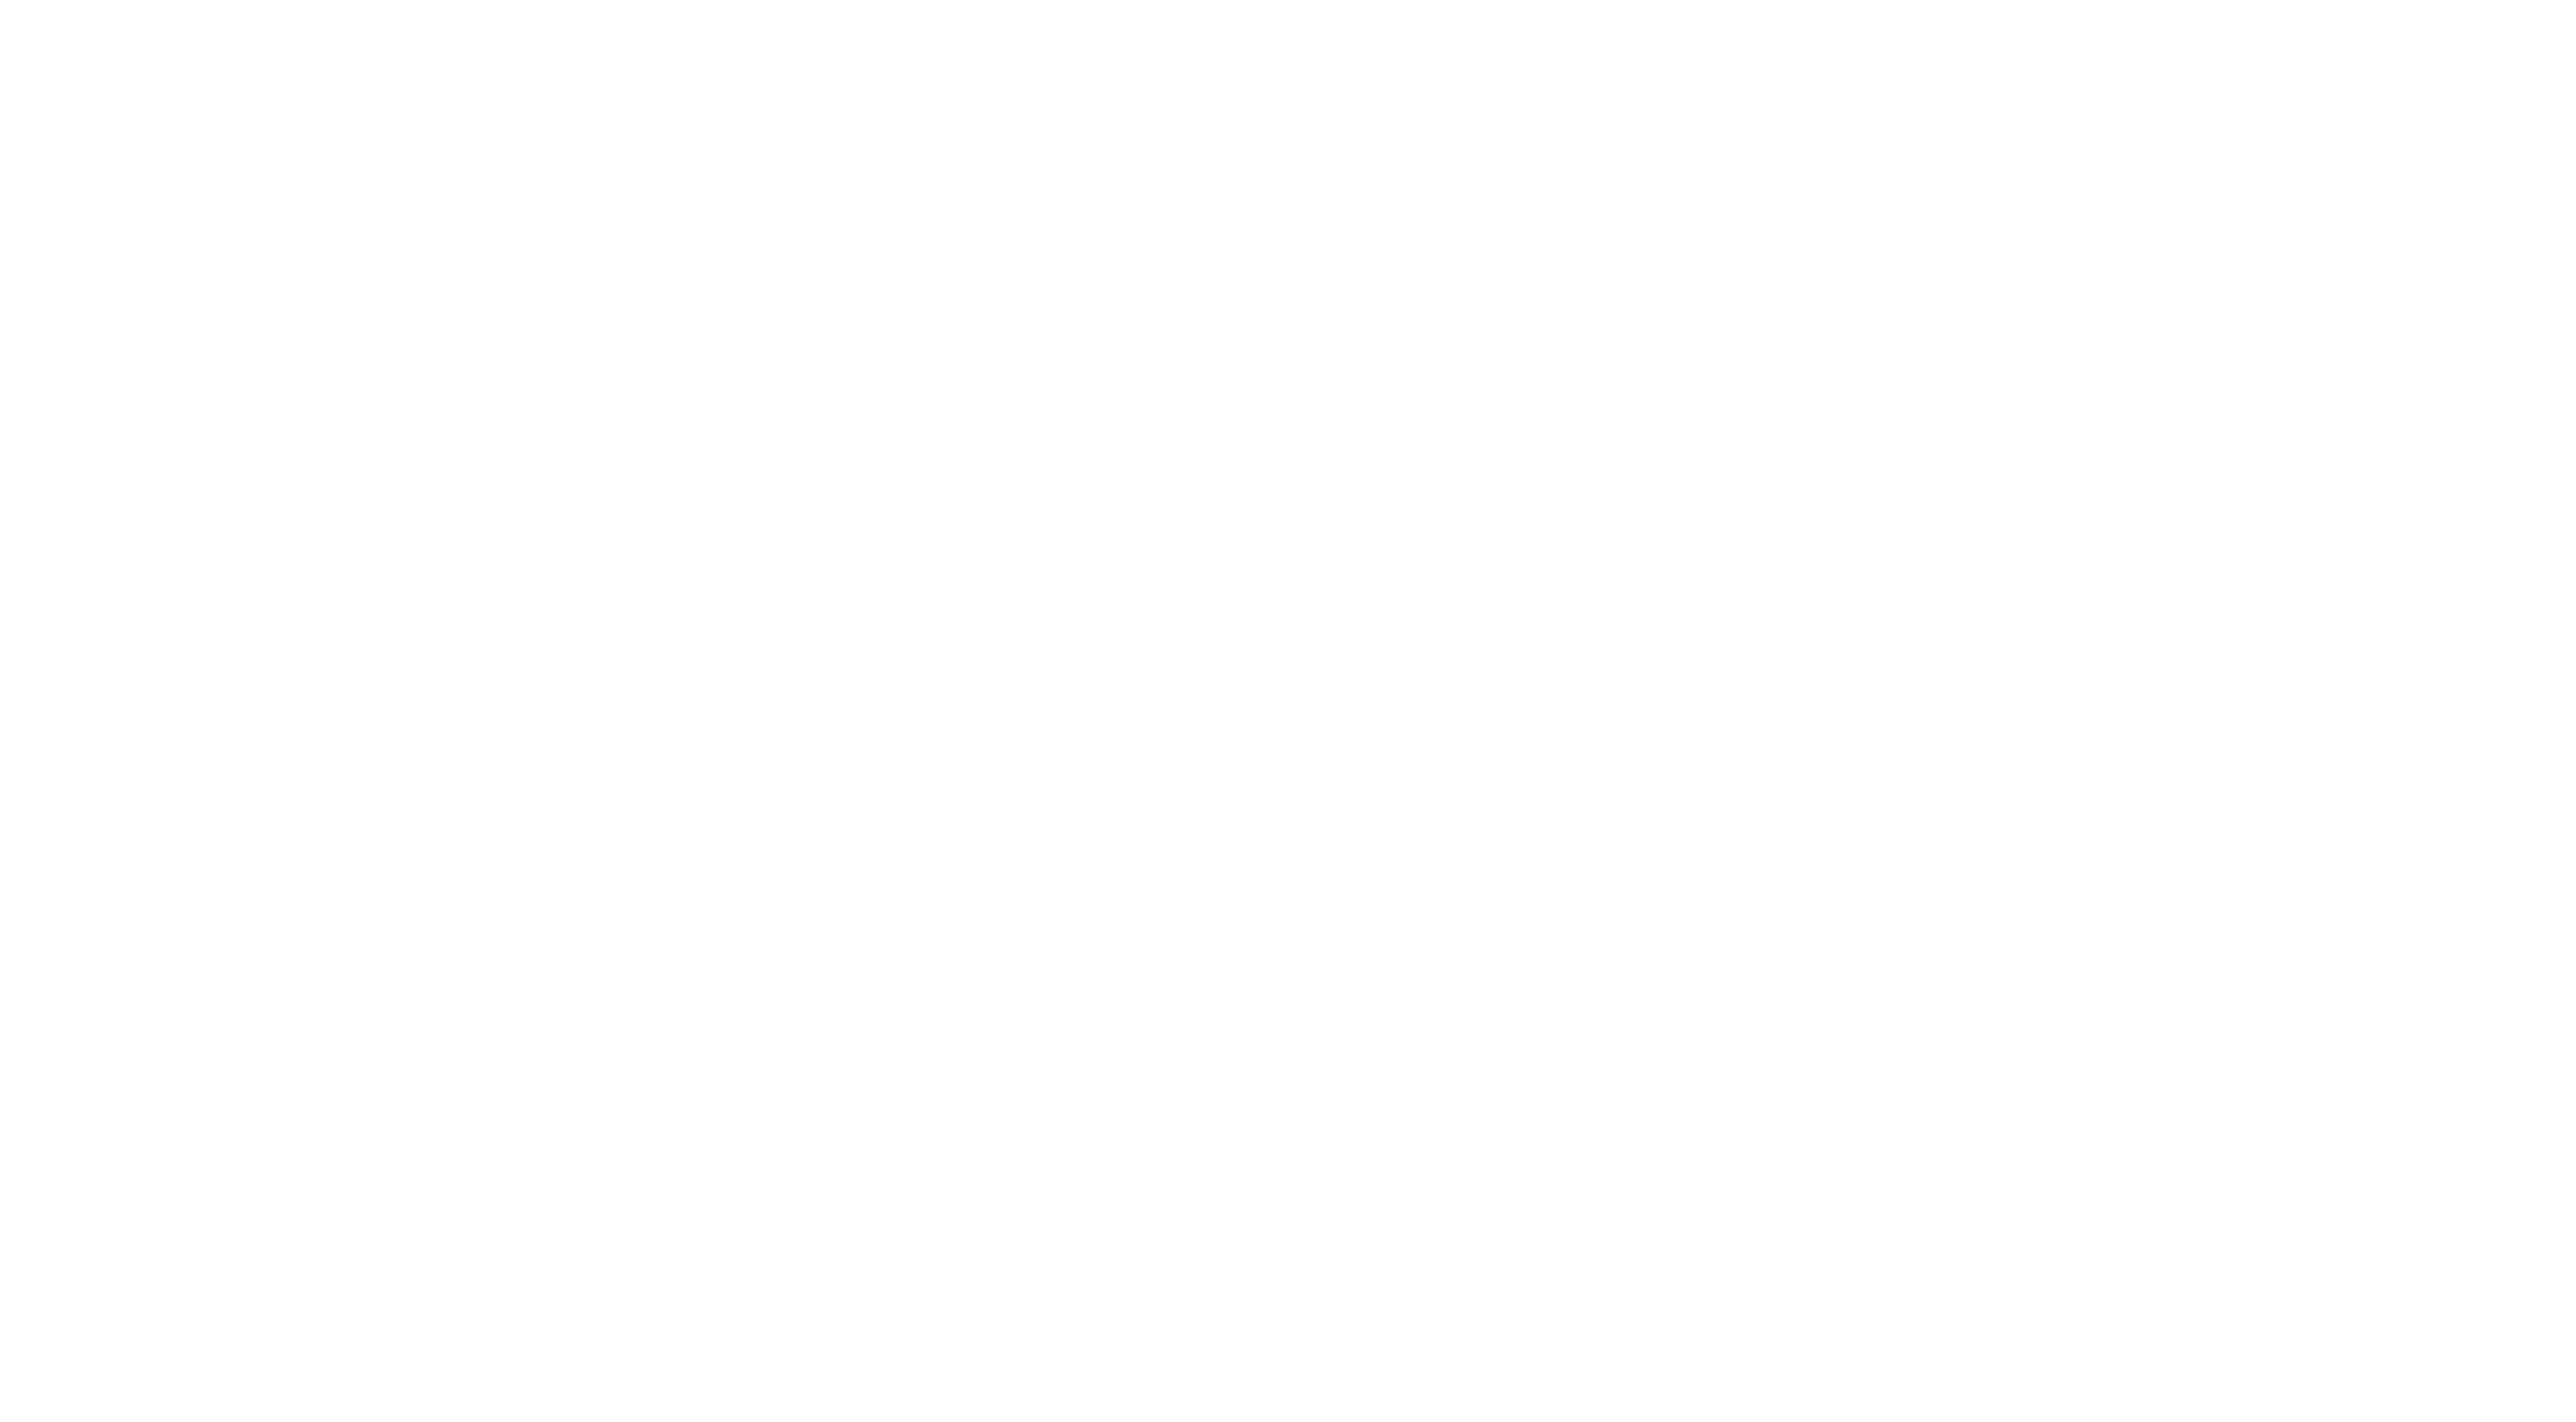 360PSG